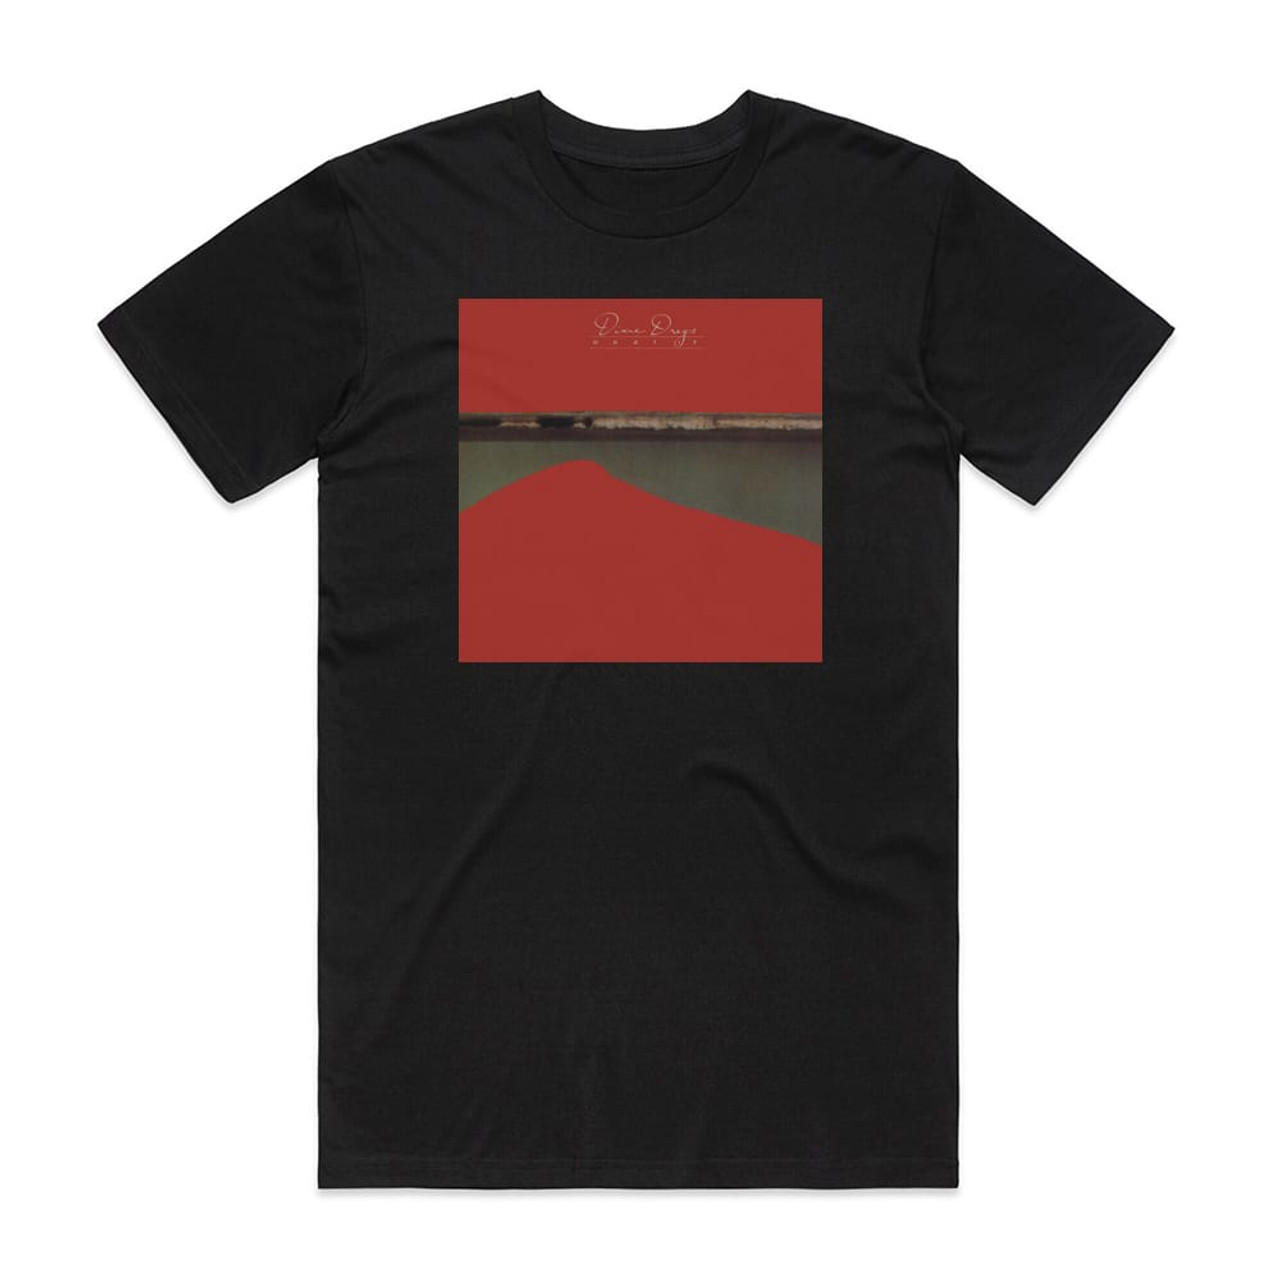 Dixie Dregs What If Album Cover T-Shirt Black